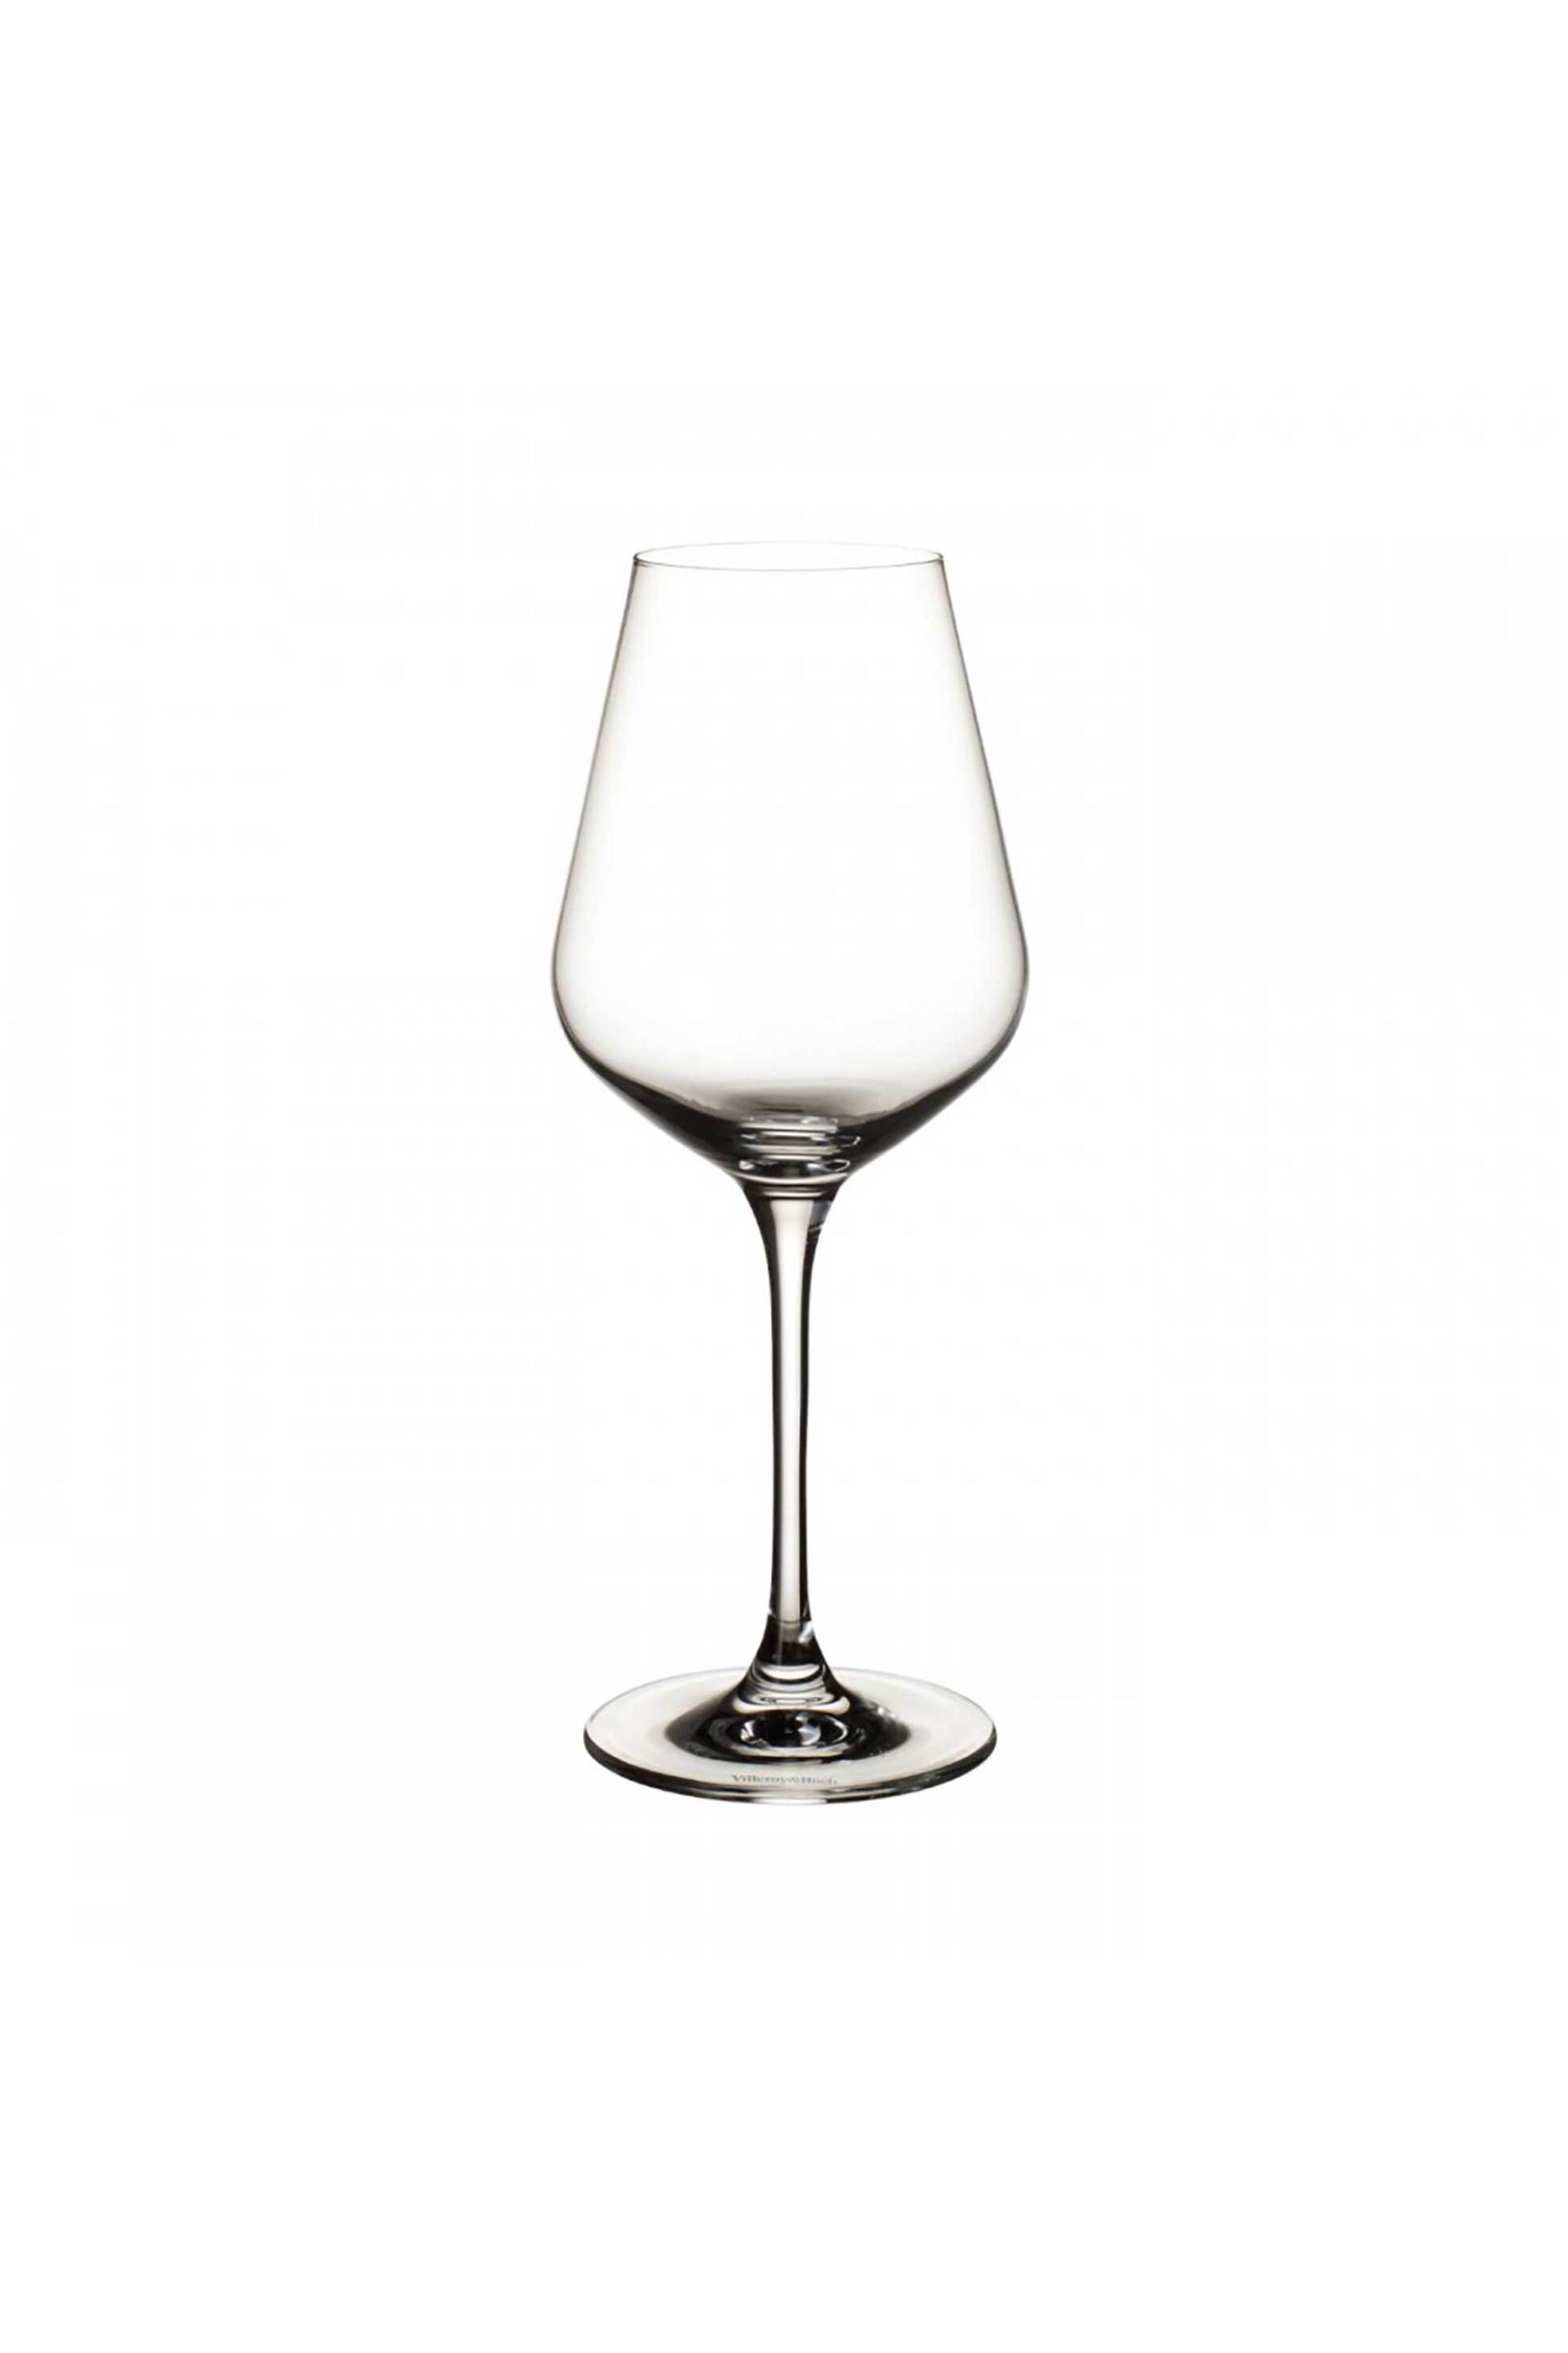 Home > ΚΟΥΖΙΝΑ > Υαλικά > Ποτήρια Villeroy & Boch σετ από 4 ποτήρια κρασιού/κοκτέιλ "La Divina" 380ml - 3667-8120